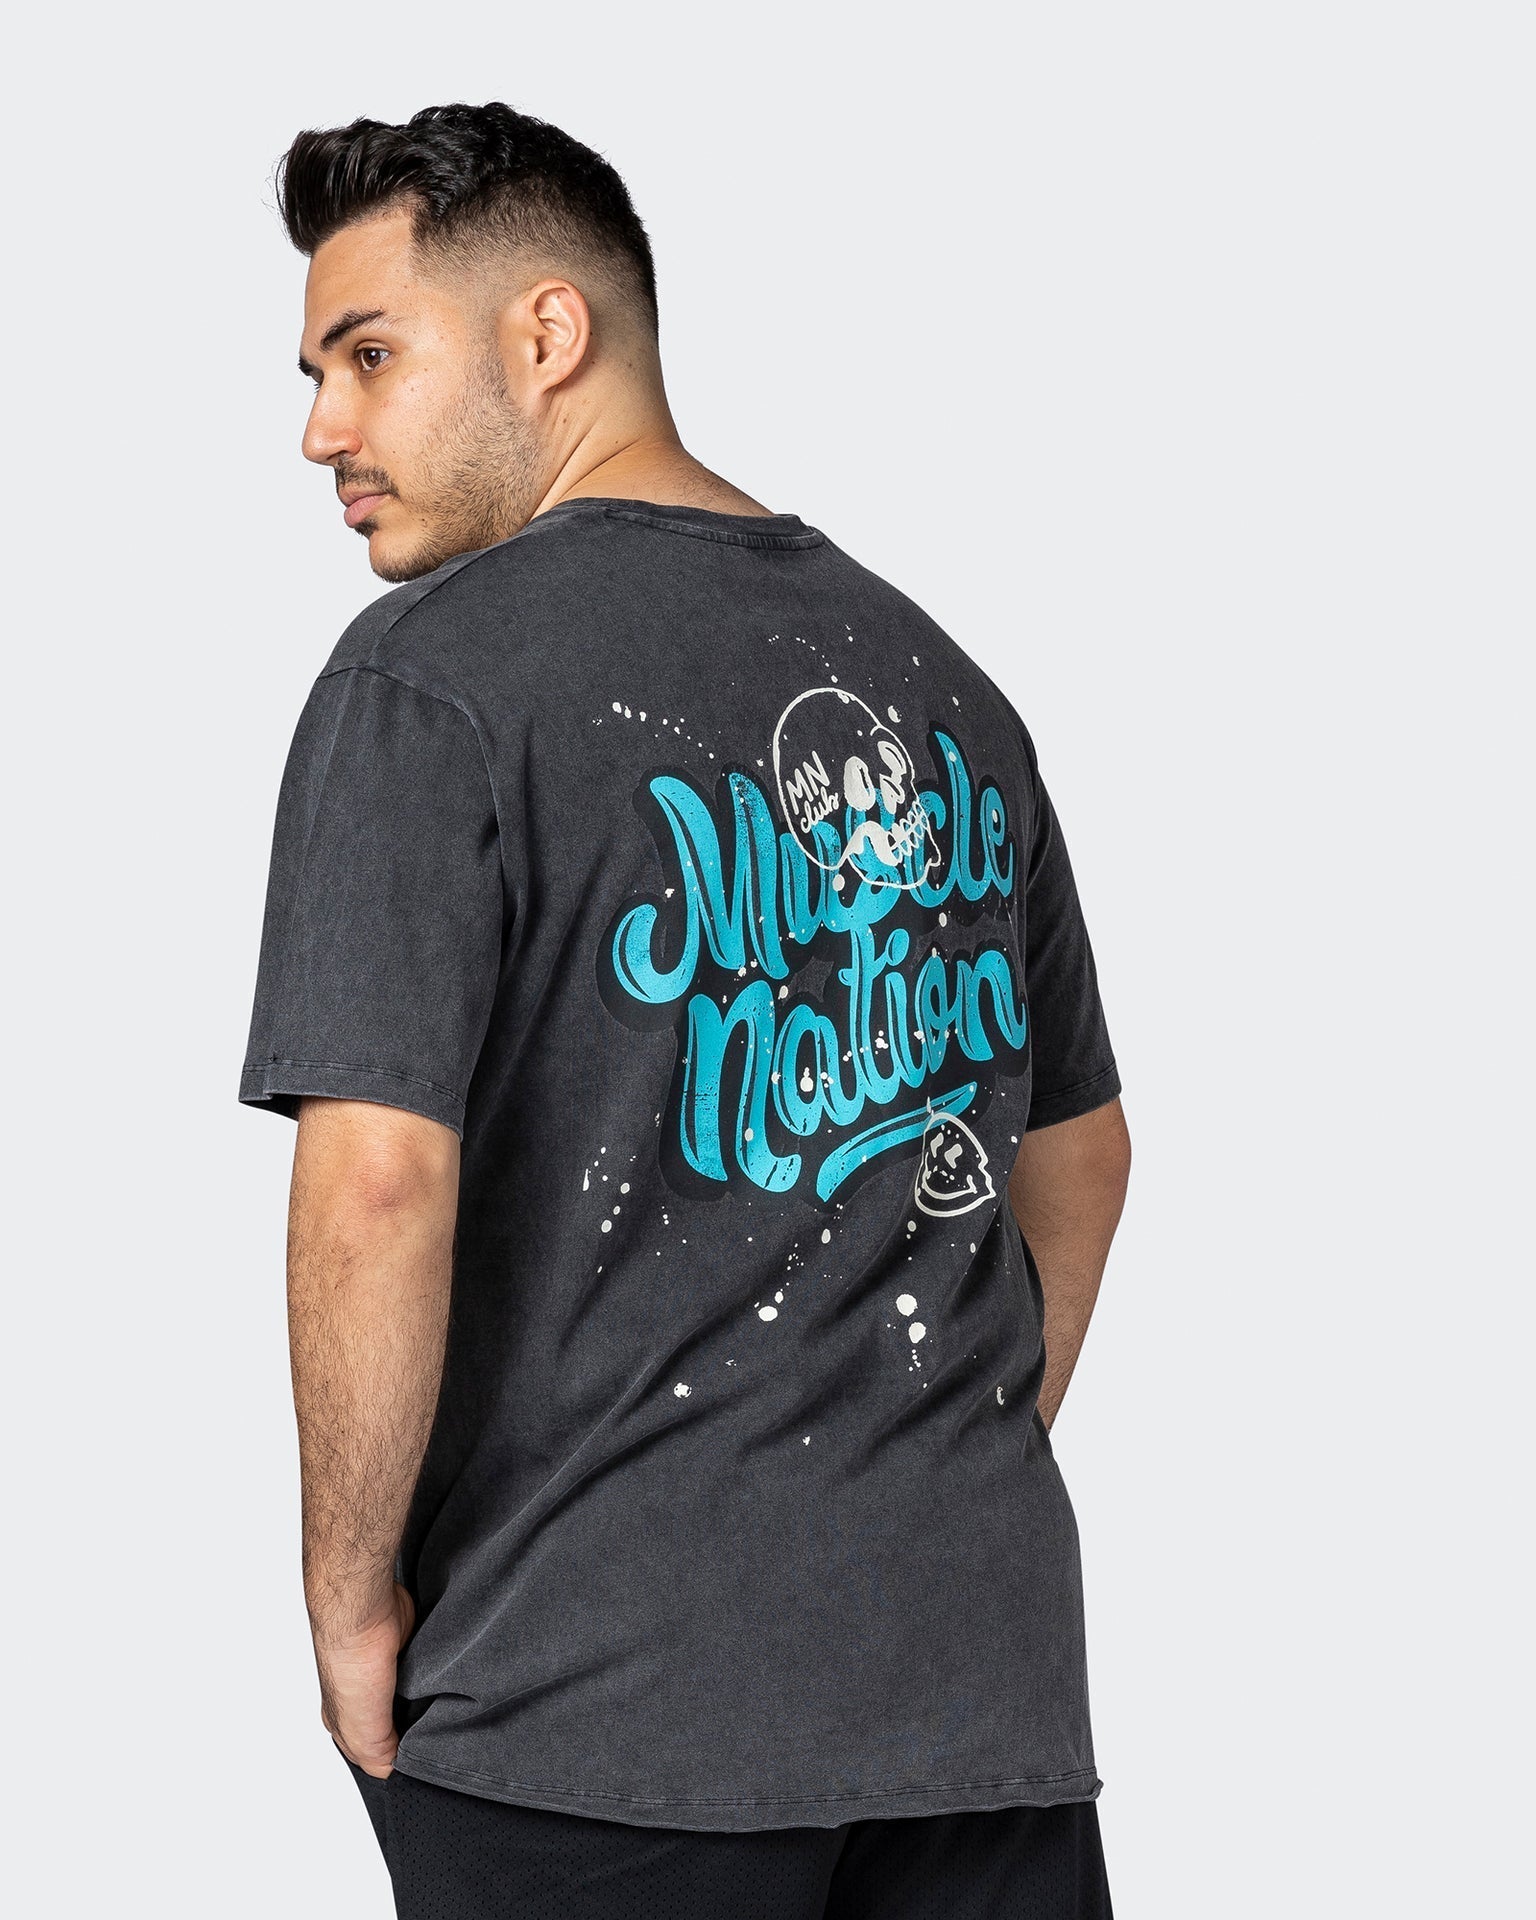 musclenation T-Shirts Mens Graffiti Tag Oversized Vintage Tee Washed Black / Capri Blue